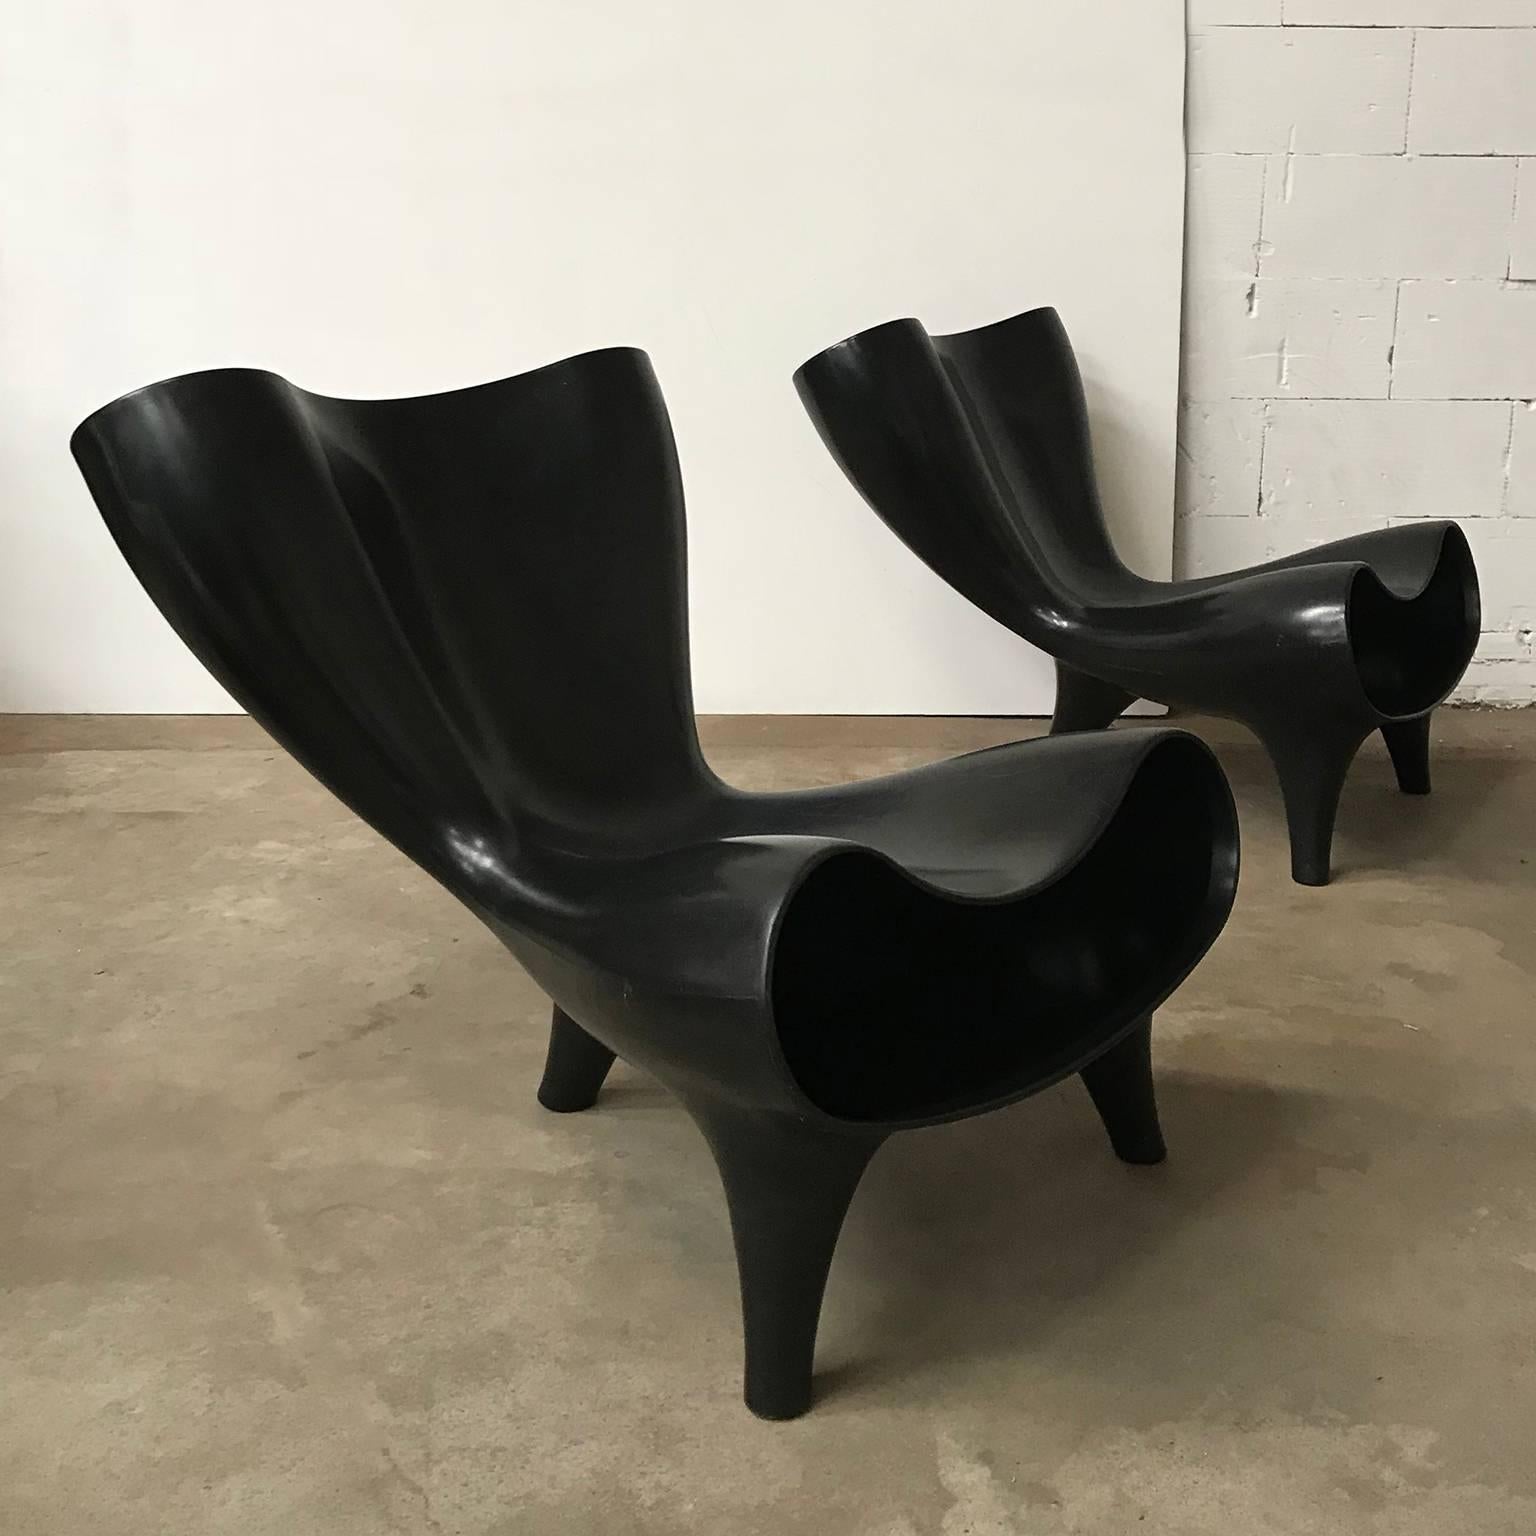 1983, Marc Newson, Black Orgone Chair 9